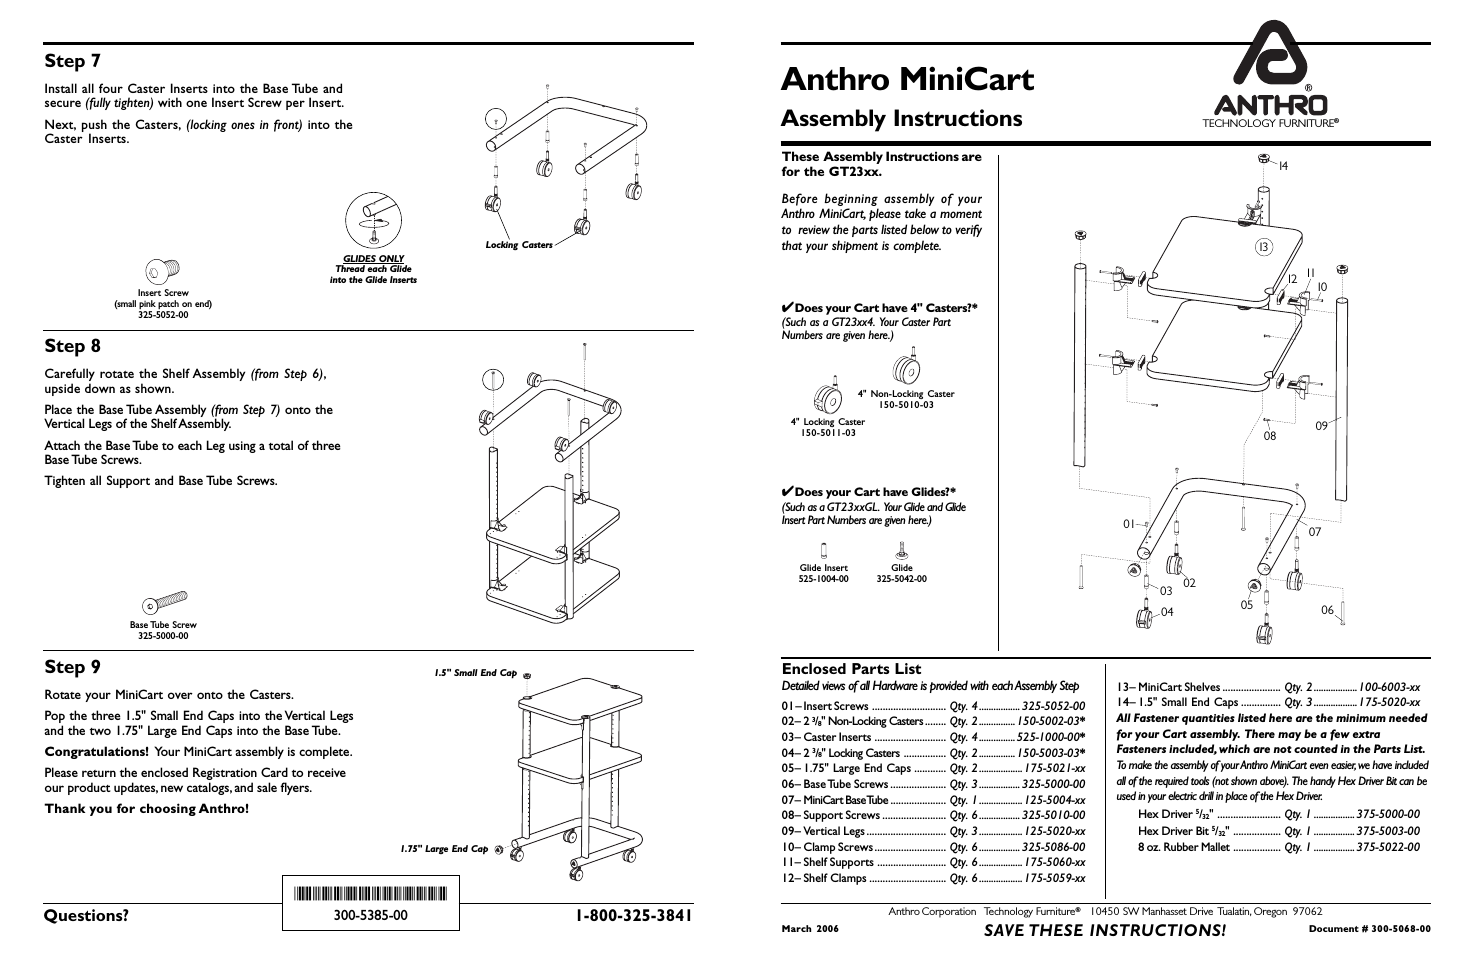 MiniCart Assembly Instructions